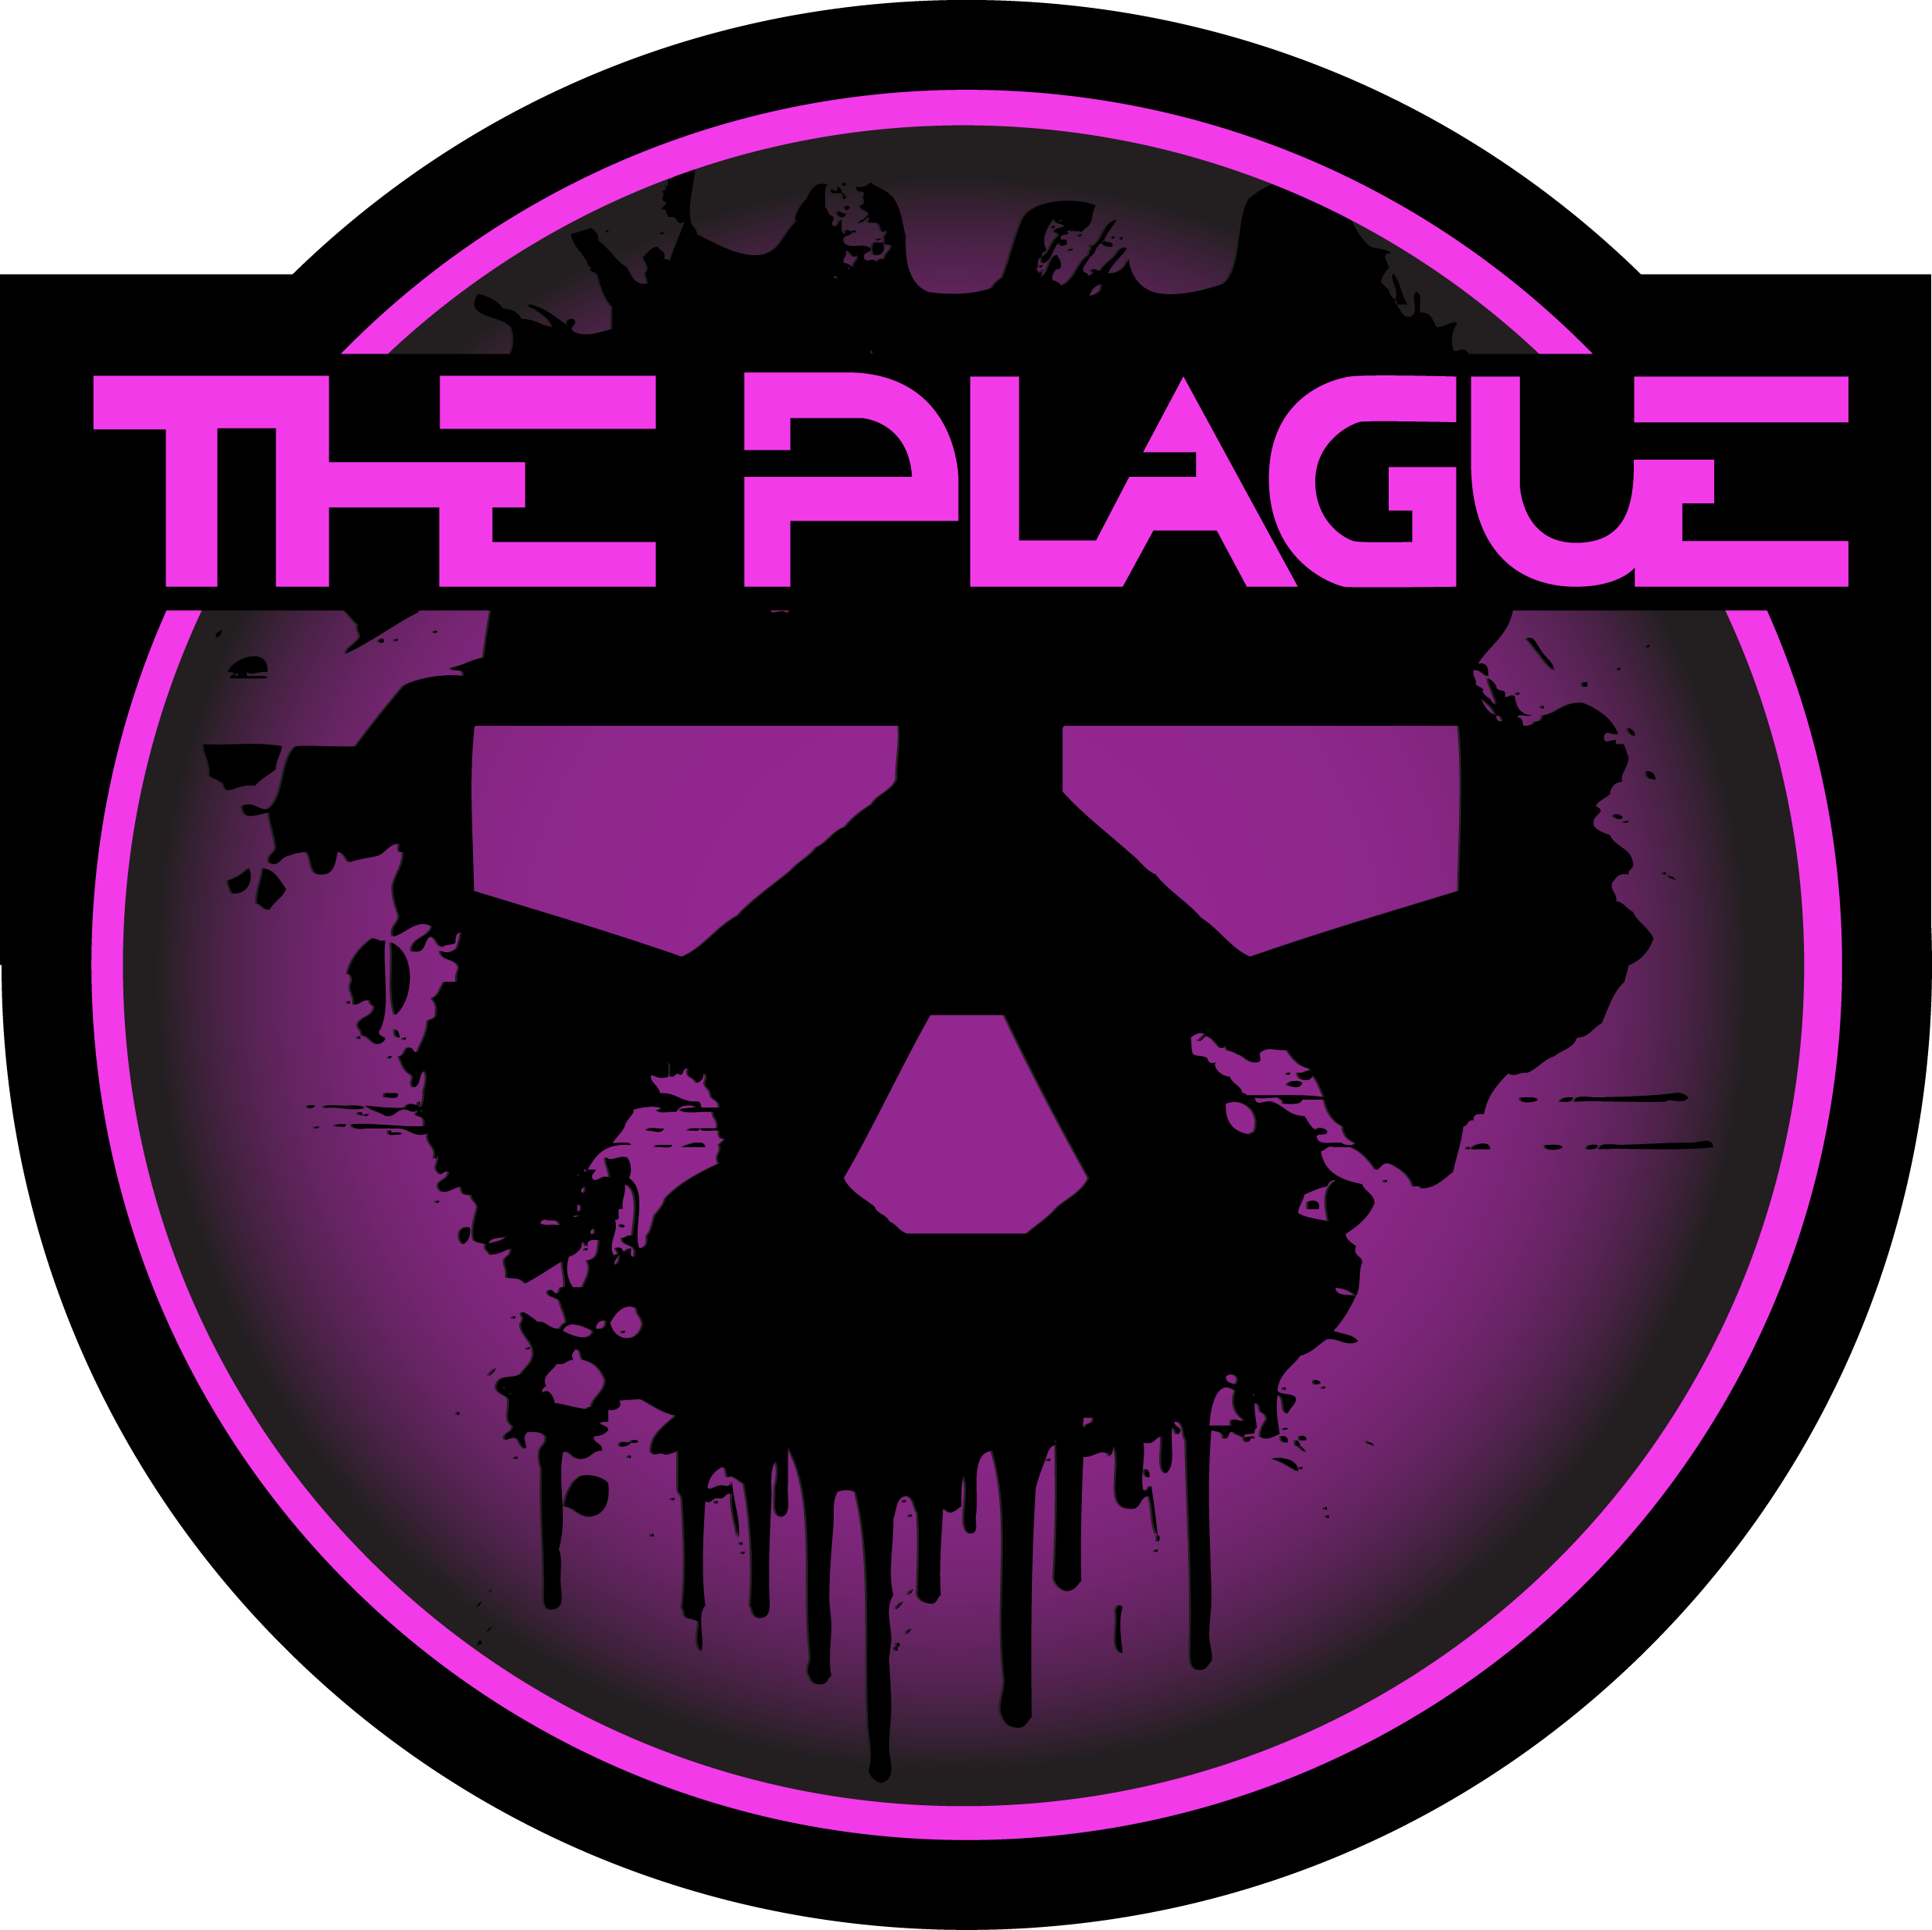 Plague Logo - The Plague Band. The Plague Hope For The Future. Plague Available